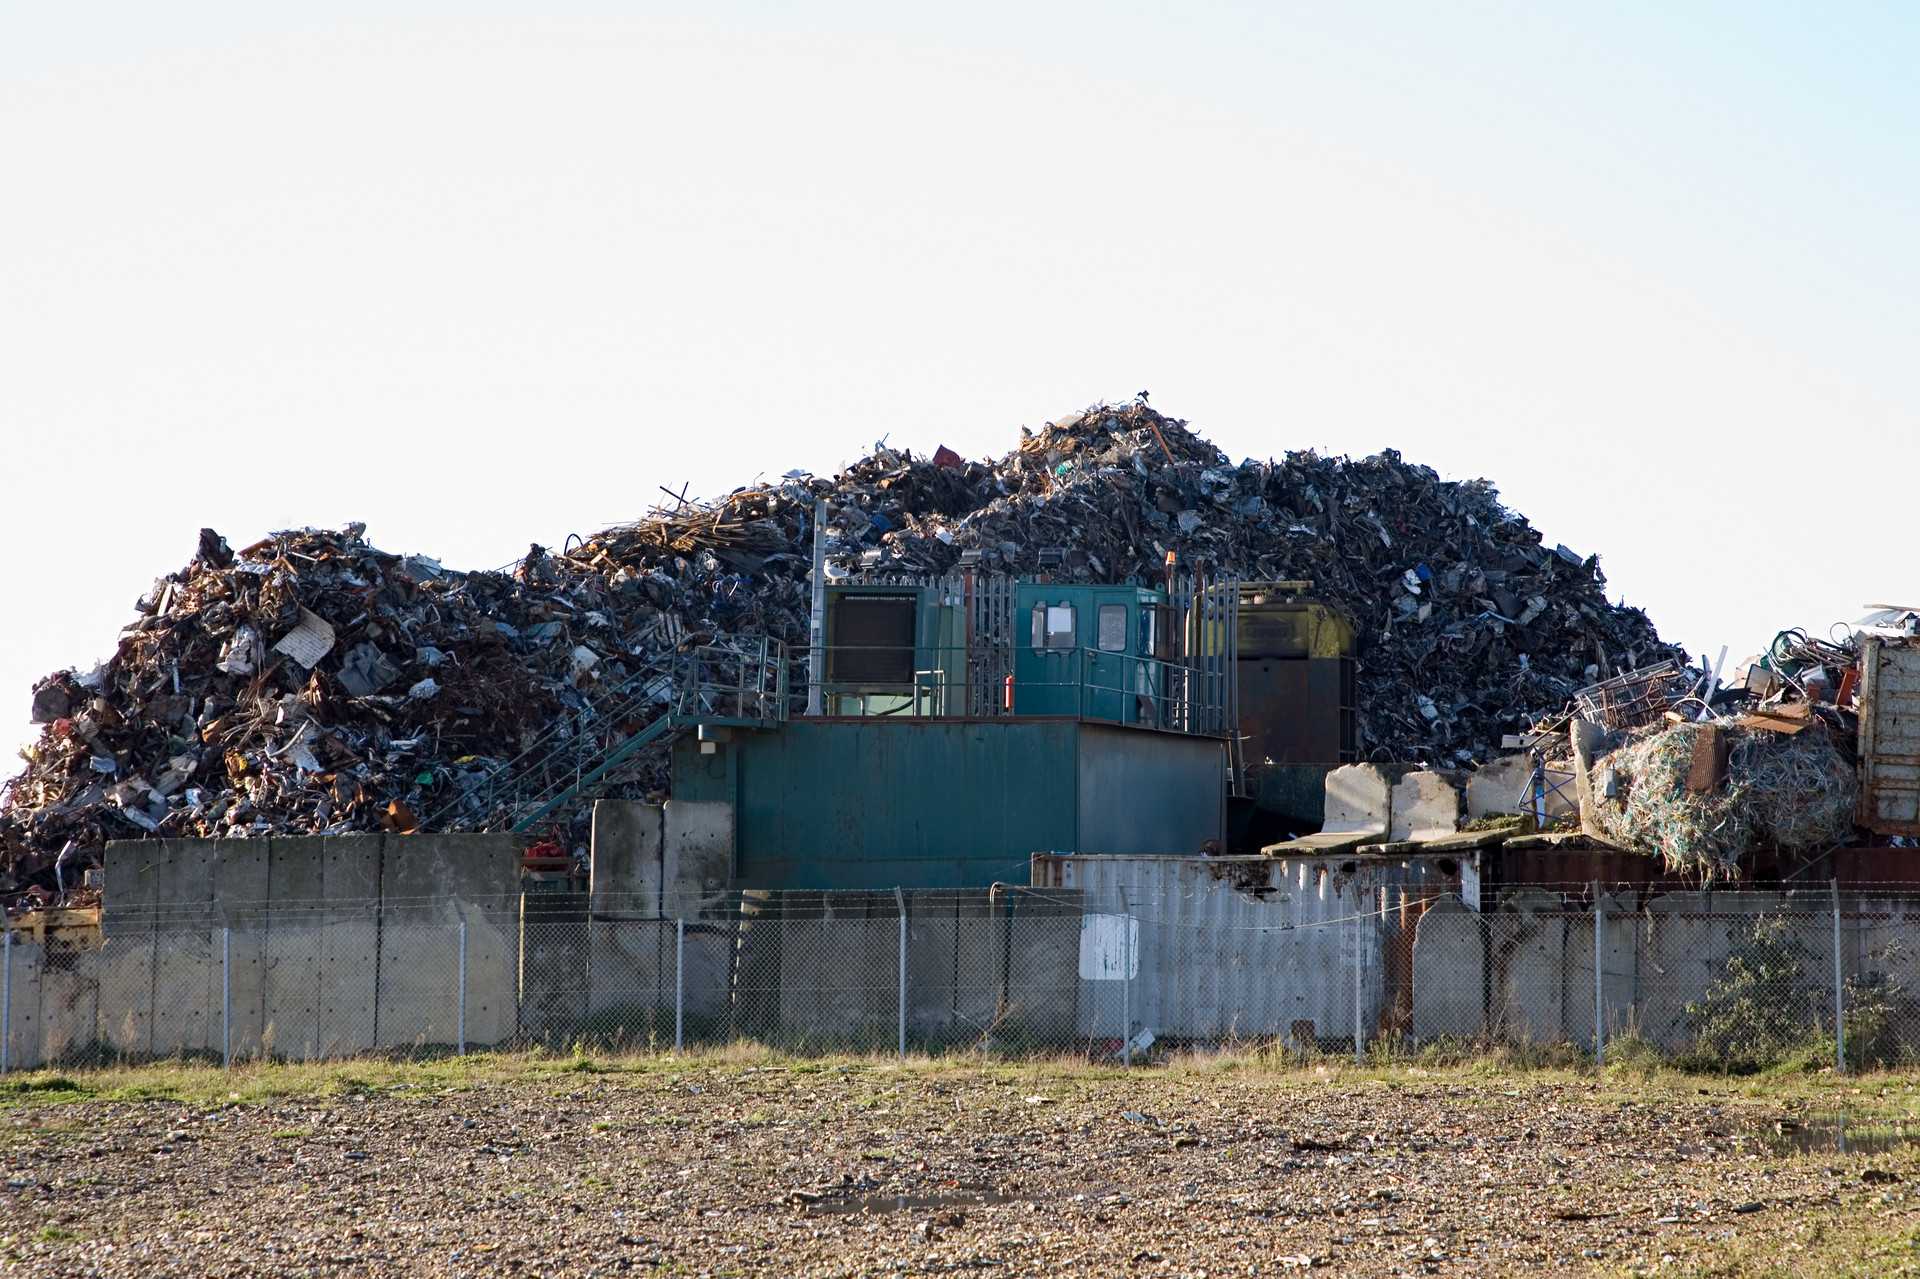 The landfill leachate treatment equipment treats the landfill leachate, which is quite effective!